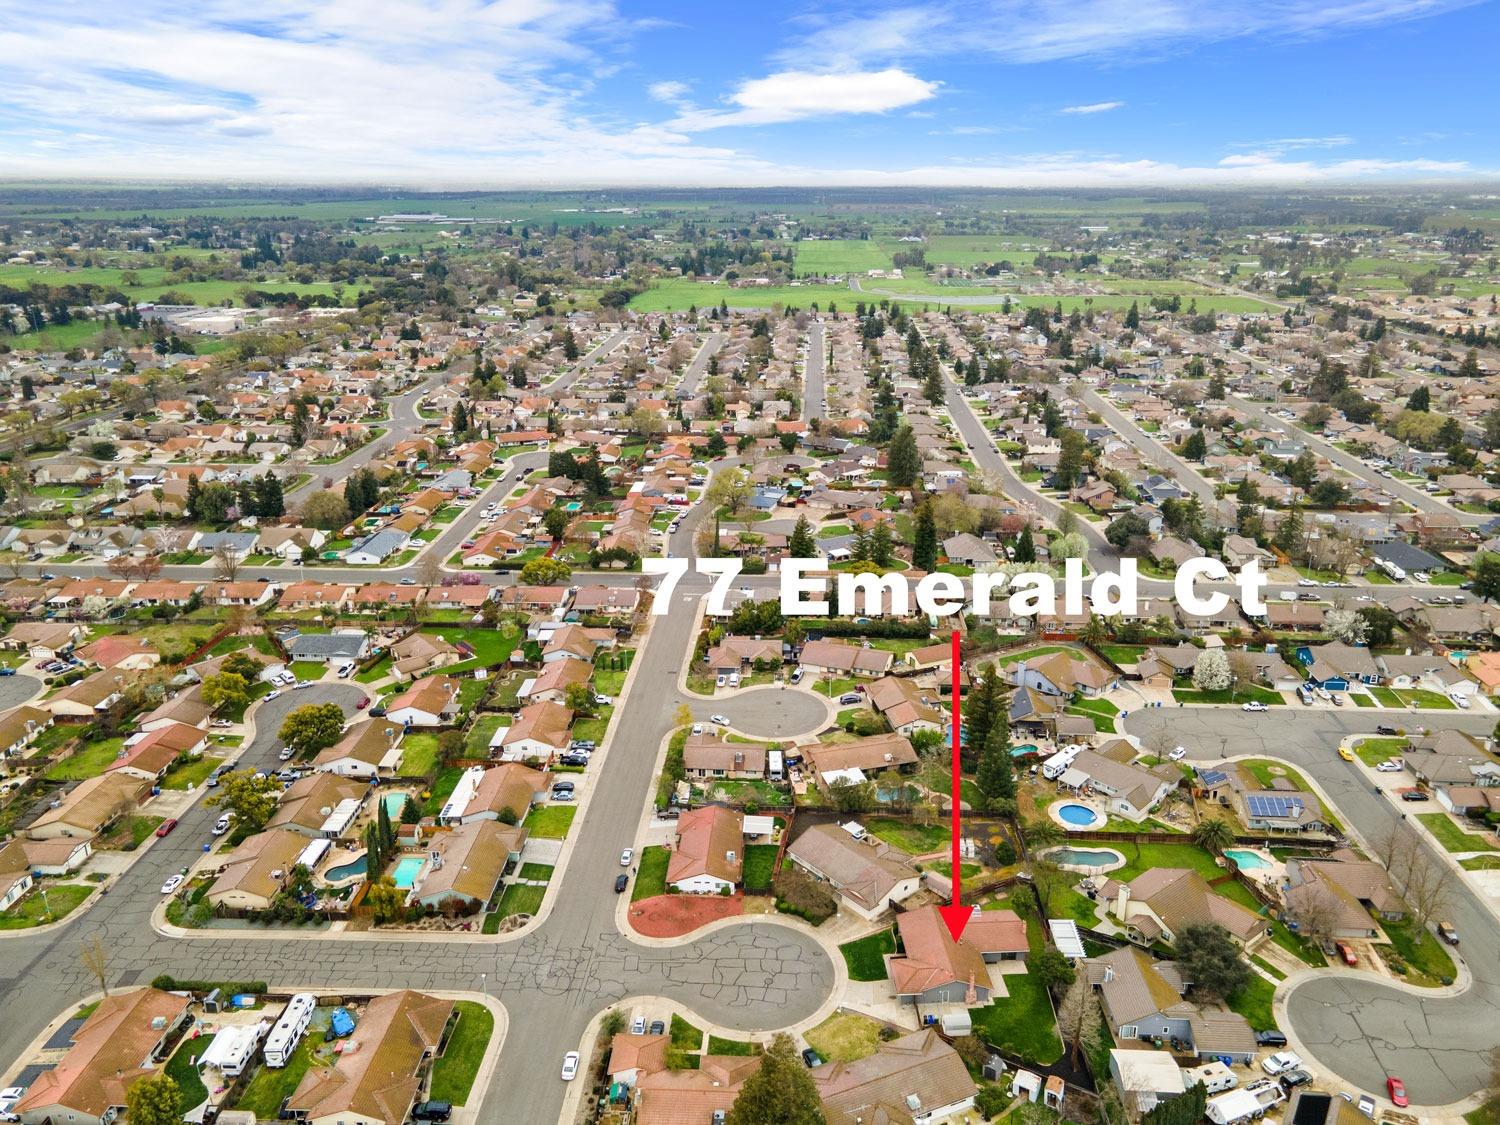 77 Emerald Court, Galt, CA 95632